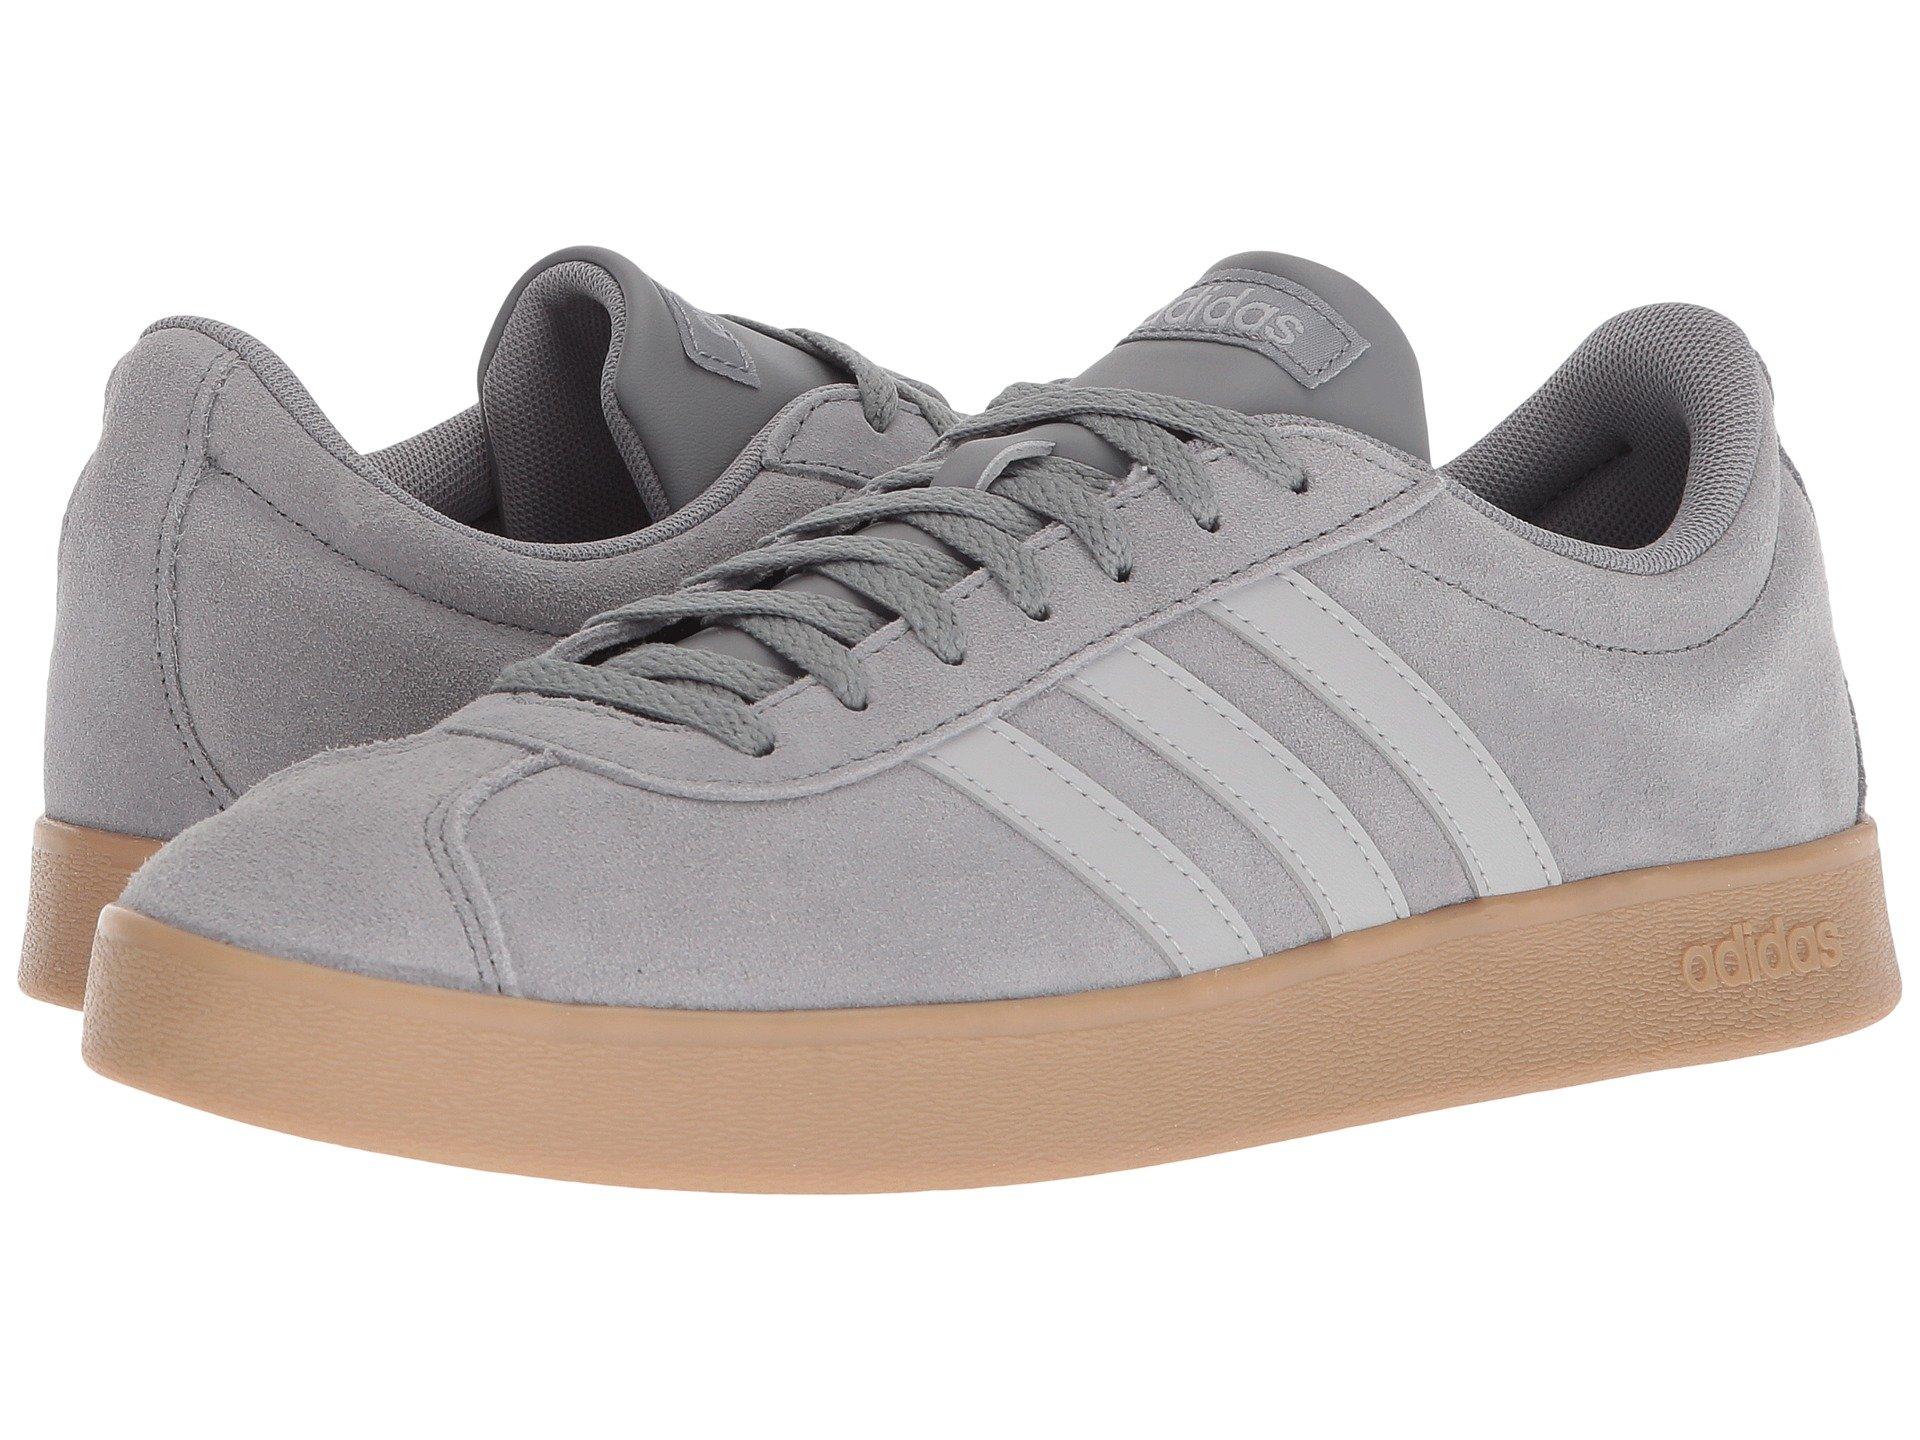 Adidas Originals Vl Court 2.0, Grey 